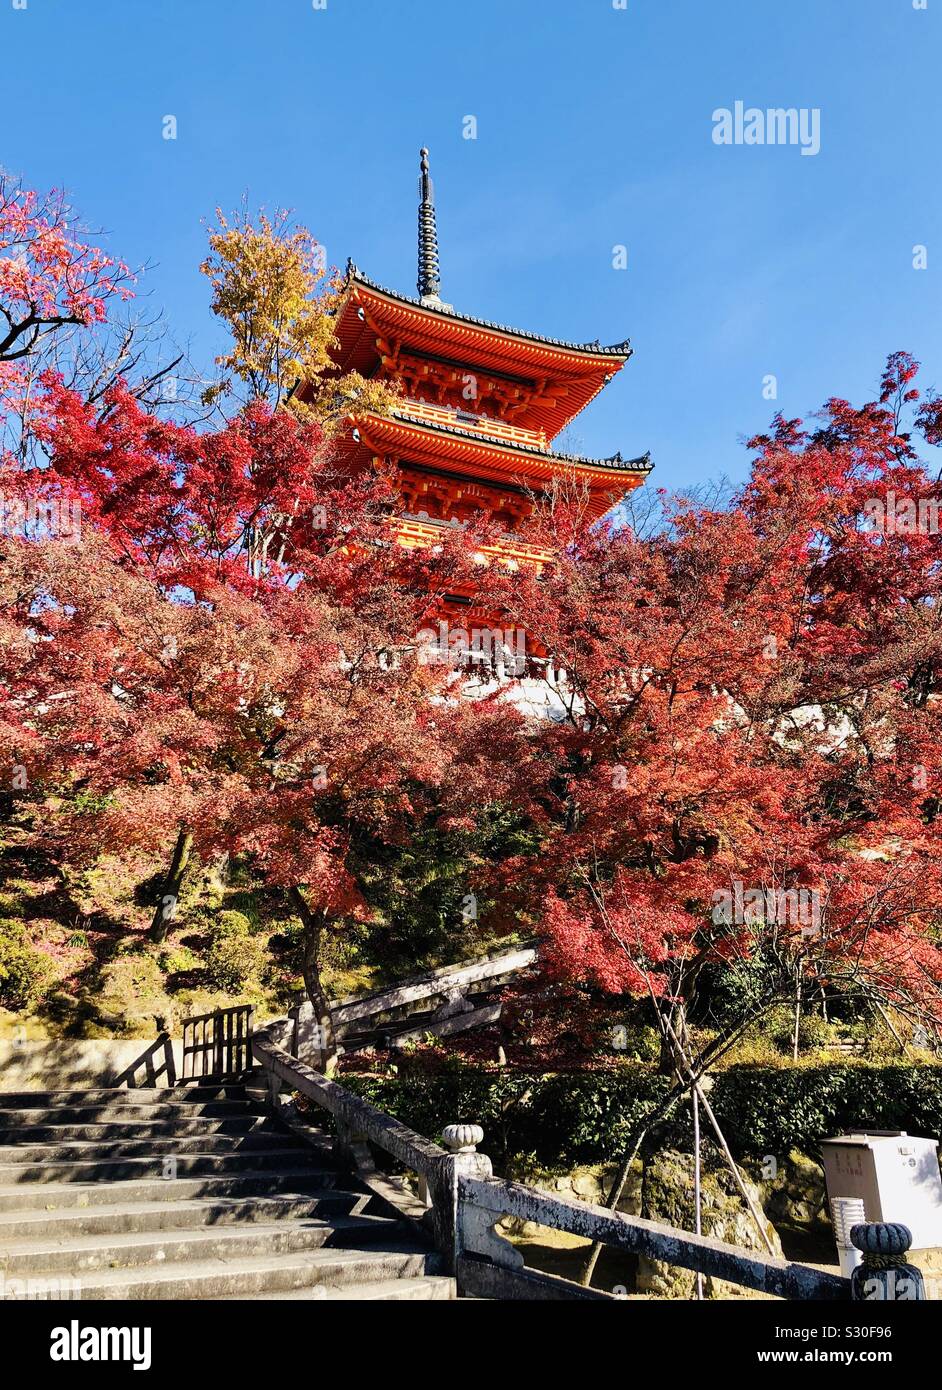 Kiyomizu Dera Temple During The Momiji Autumn Leaves Season In Kyoto Japan Stock Photo Alamy